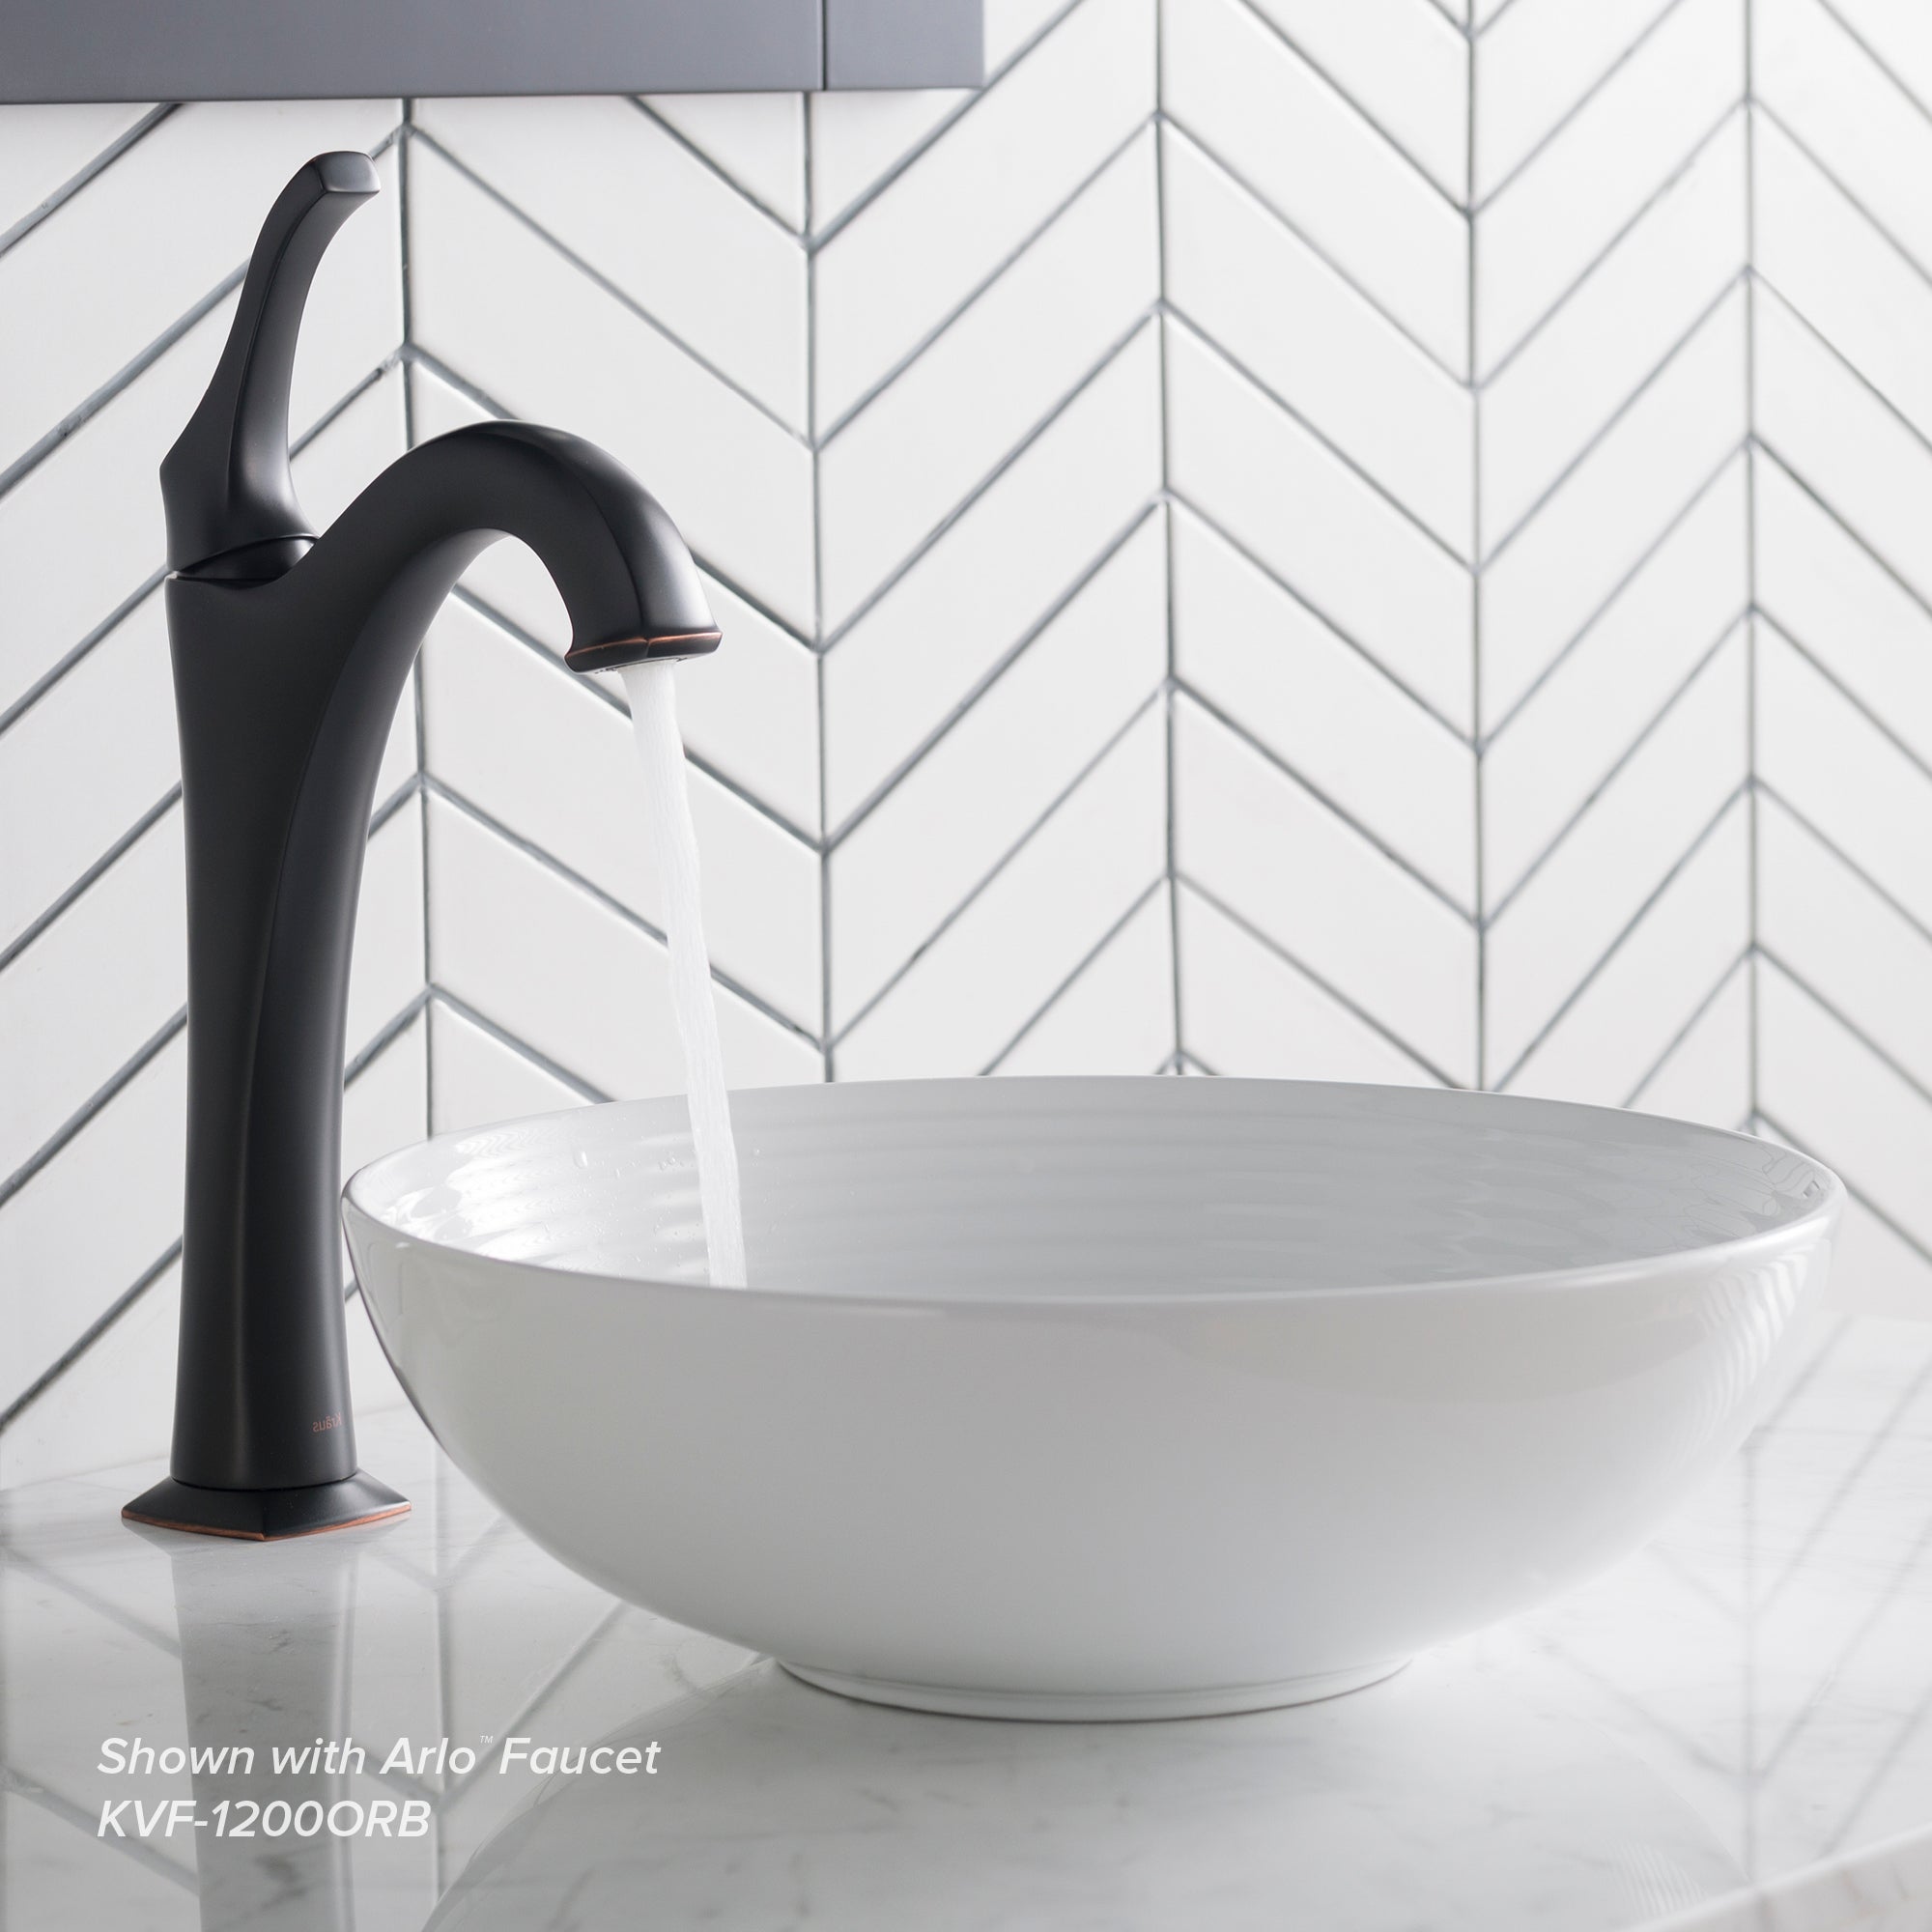 KRAUS Viva 13 Inch Round White Porcelain Ceramic Vessel Bathroom Sink-Bathroom Sinks-DirectSinks